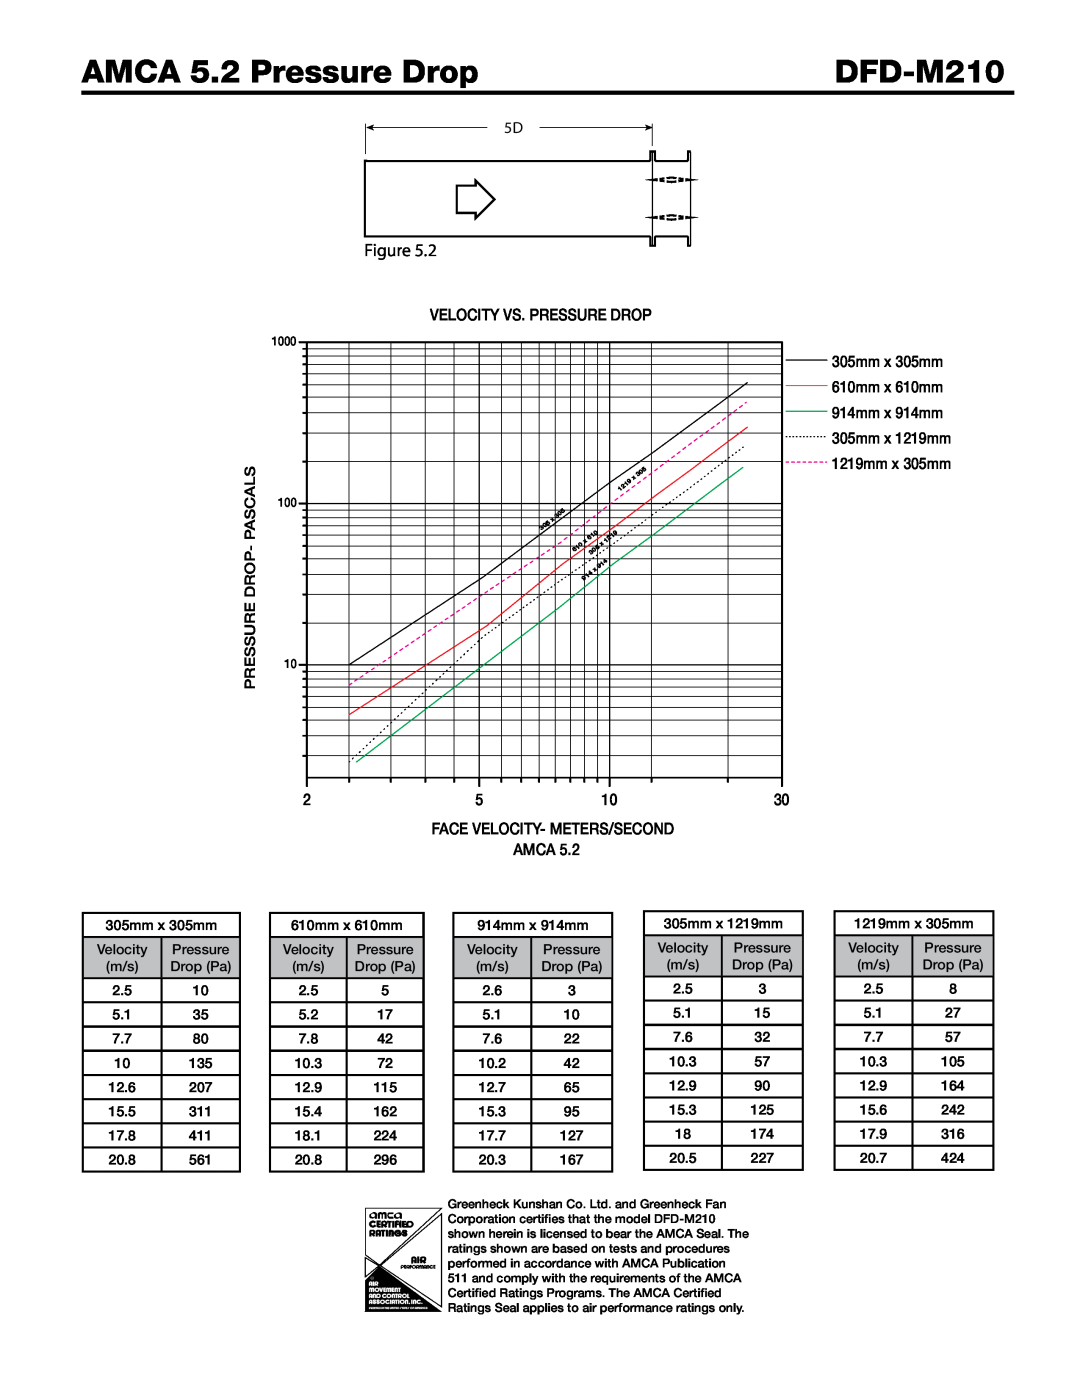 Greenheck Fan DFD-M210 dimensions AMCA 5.2 Pressure Drop, 14$%30113&4463, $&7&-0$*5.&5&344&$0/%, $ 